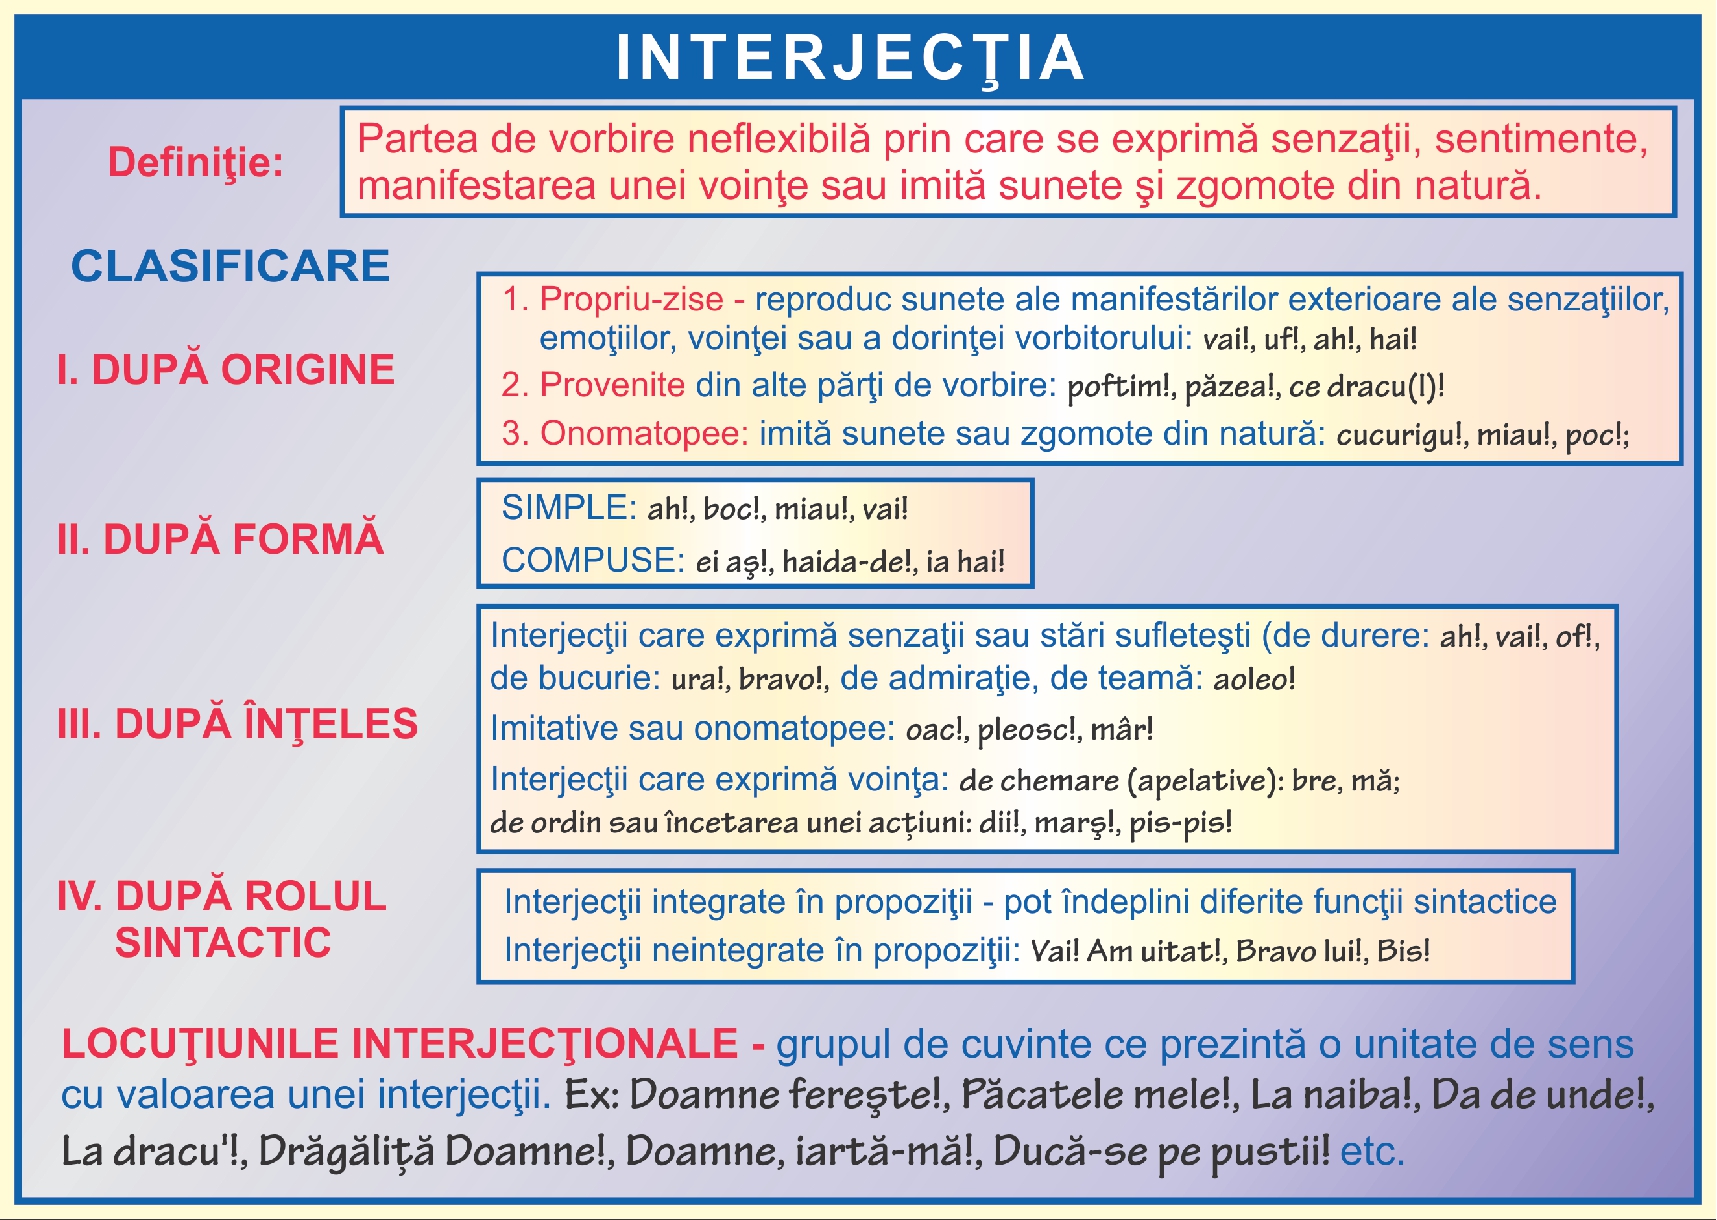 Interjectia - I